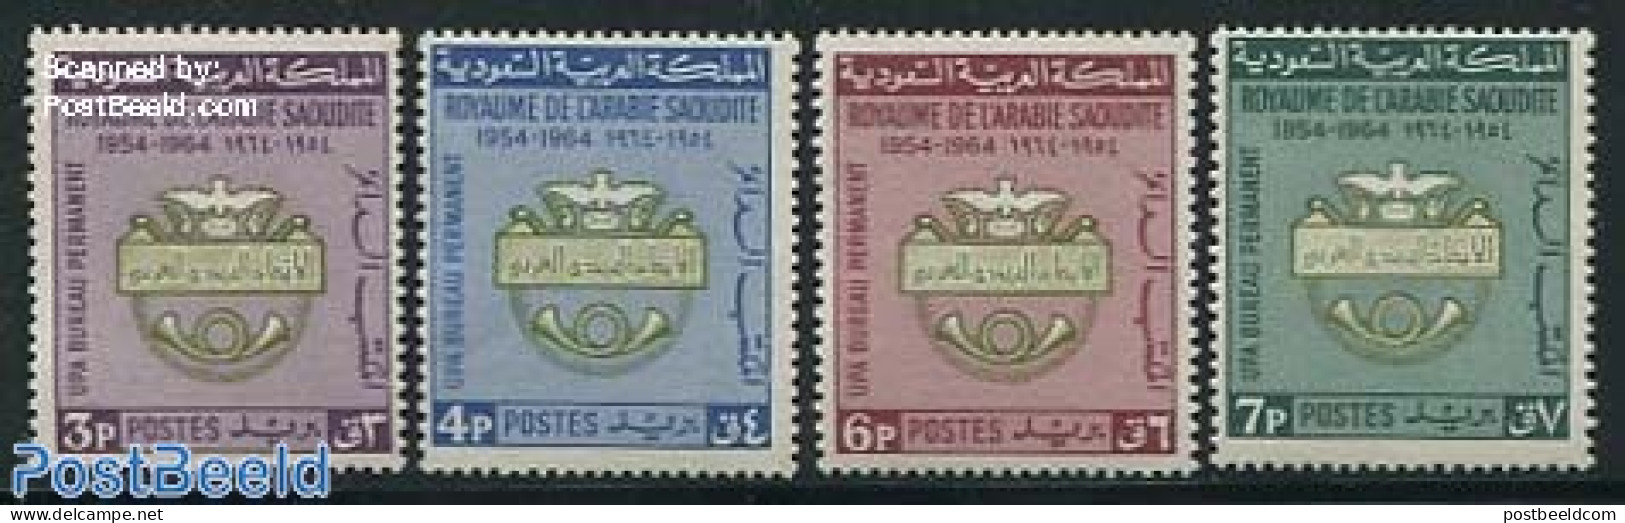 Saudi Arabia 1966 Arab Postal Union 10th Anniversary 4v, Mint NH, Post - Post